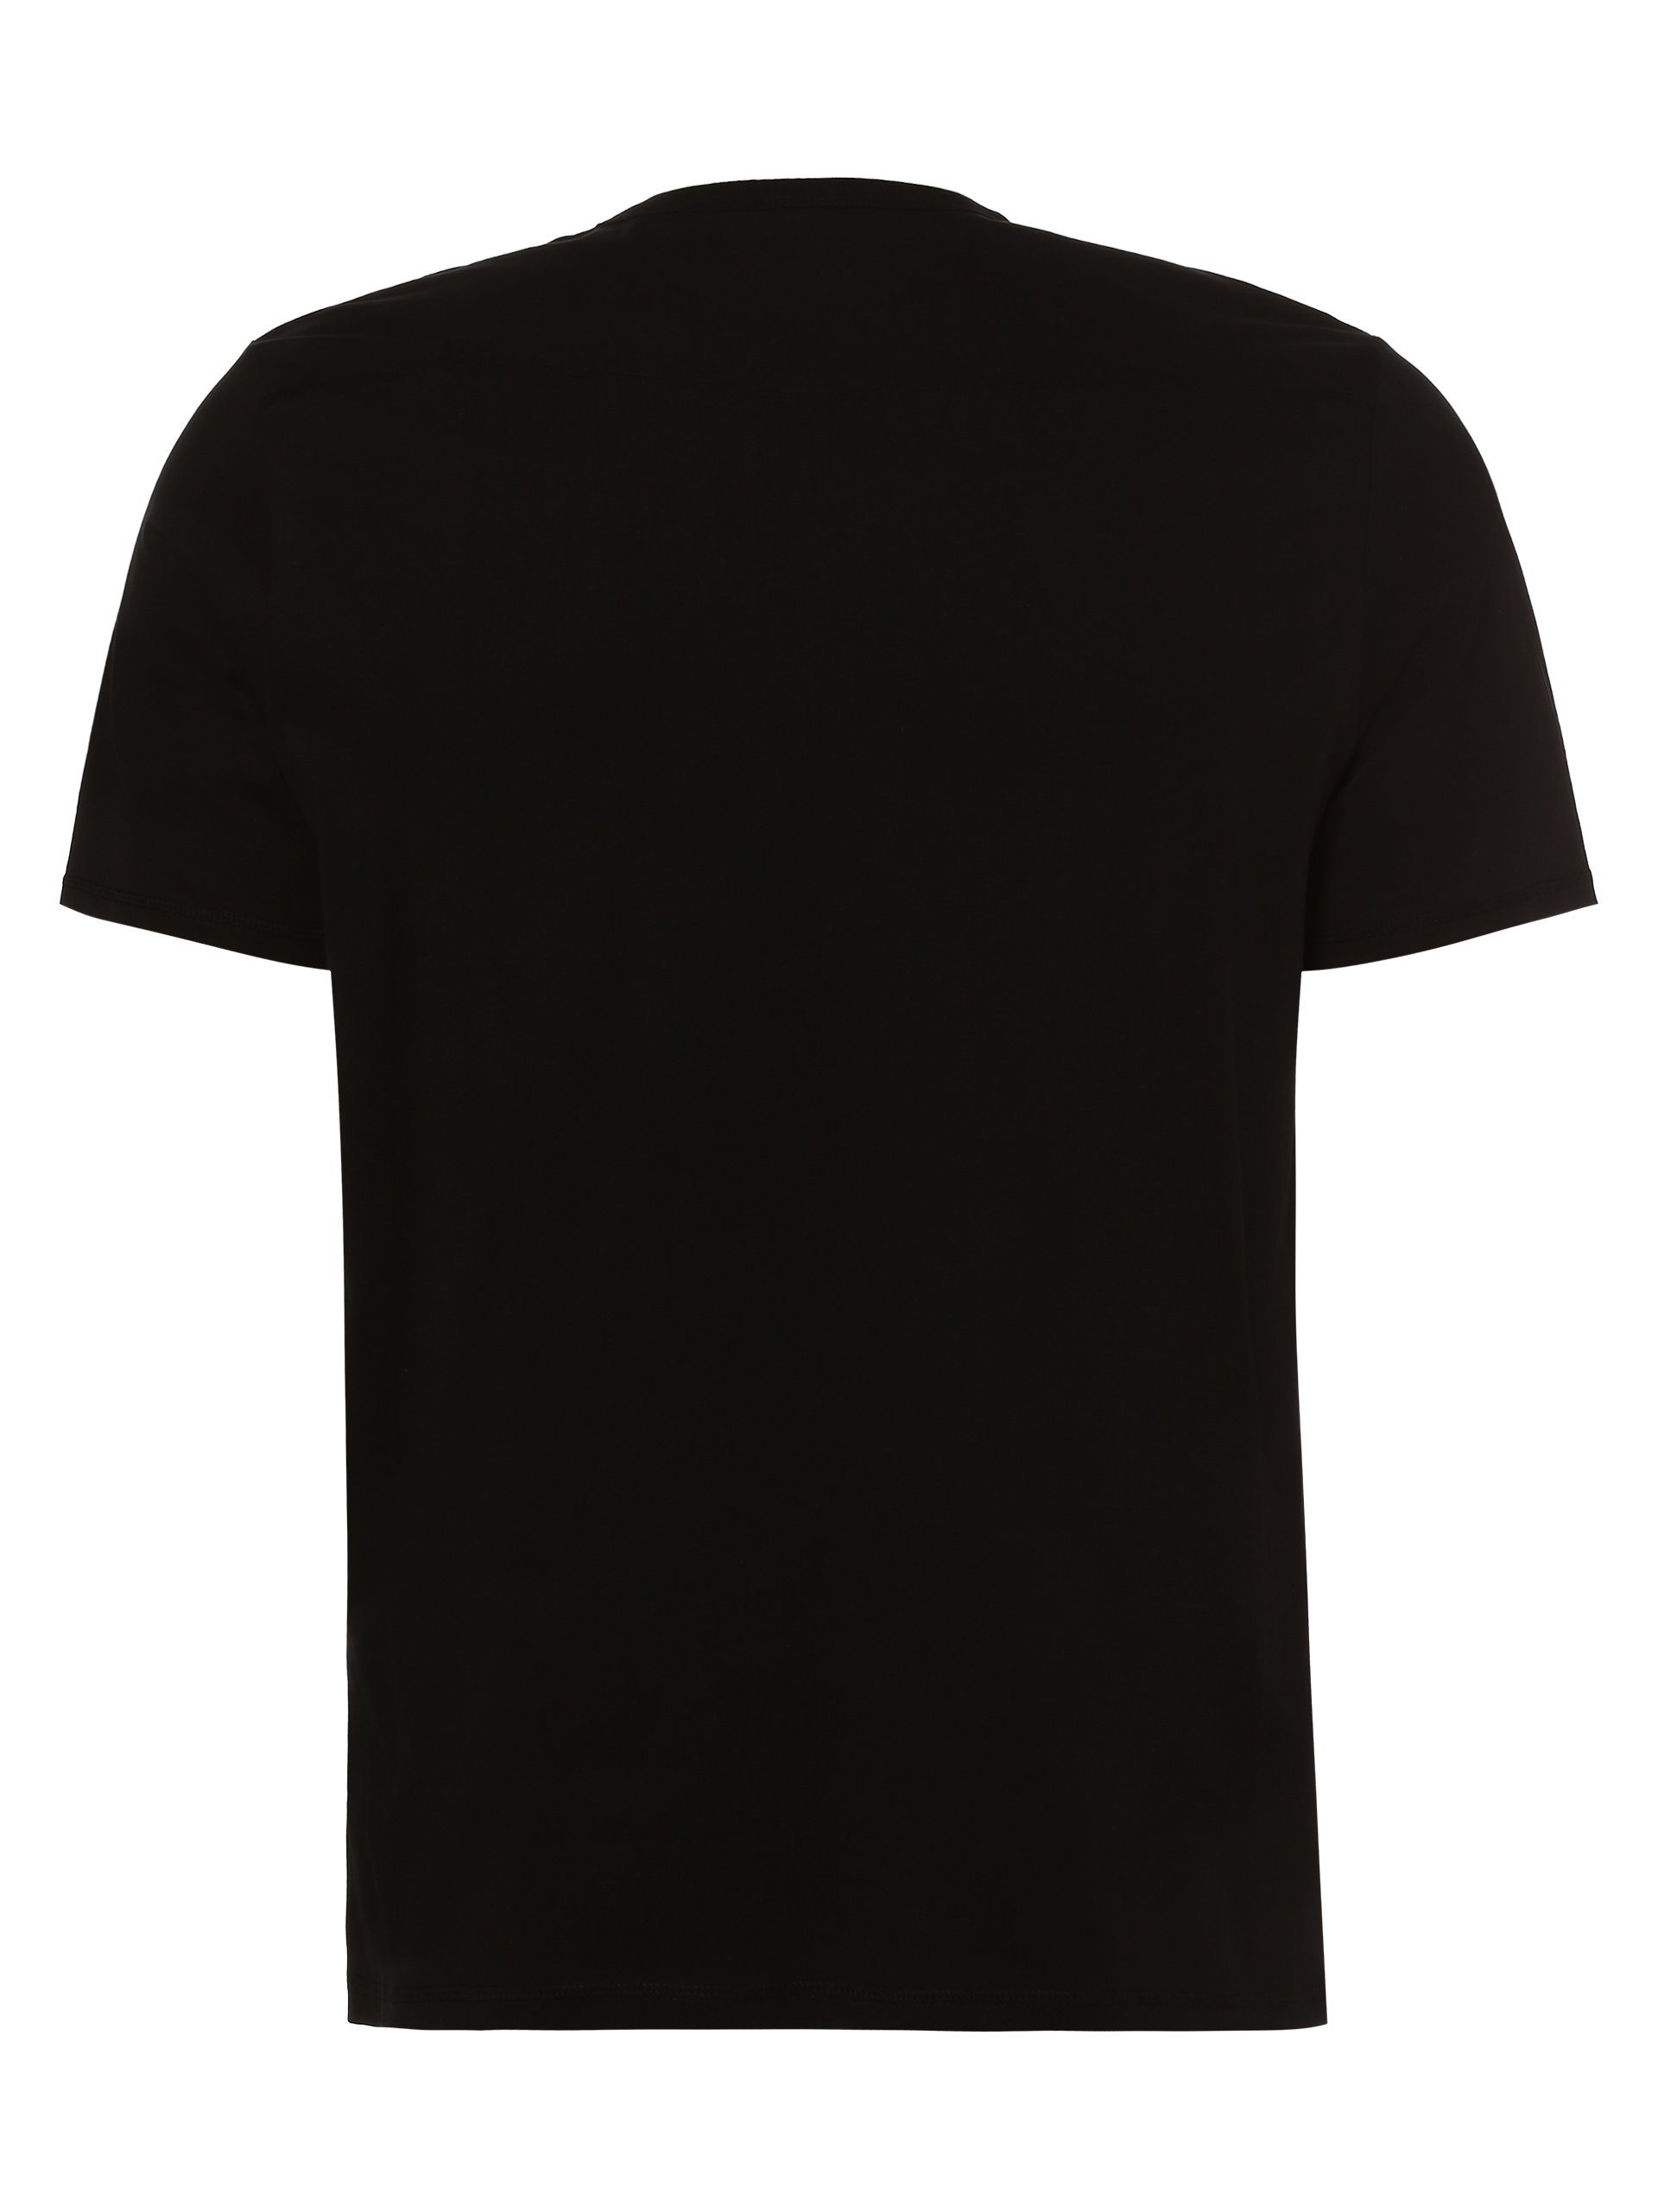 Jack & JCOClassic Jones T-Shirt schwarz